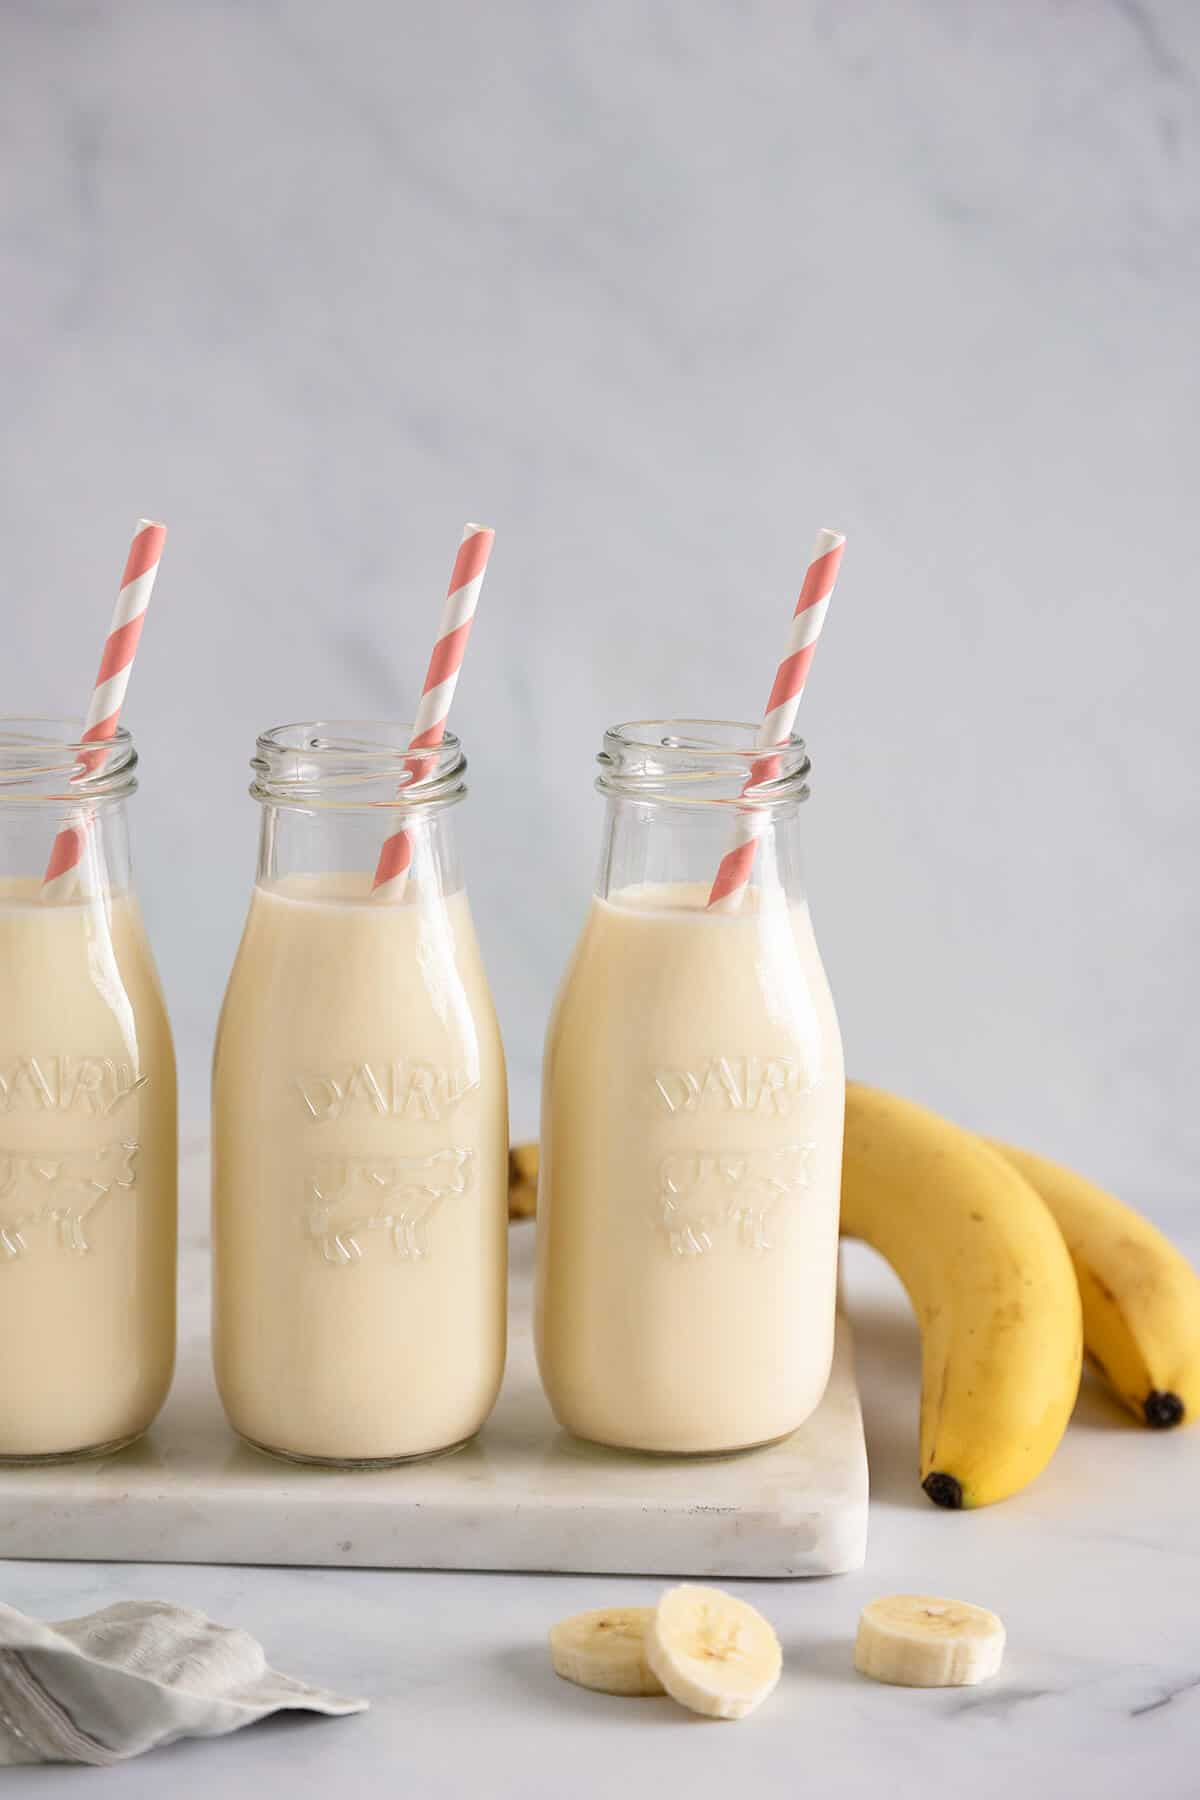 three bottles of banana milk with straws and two bananas